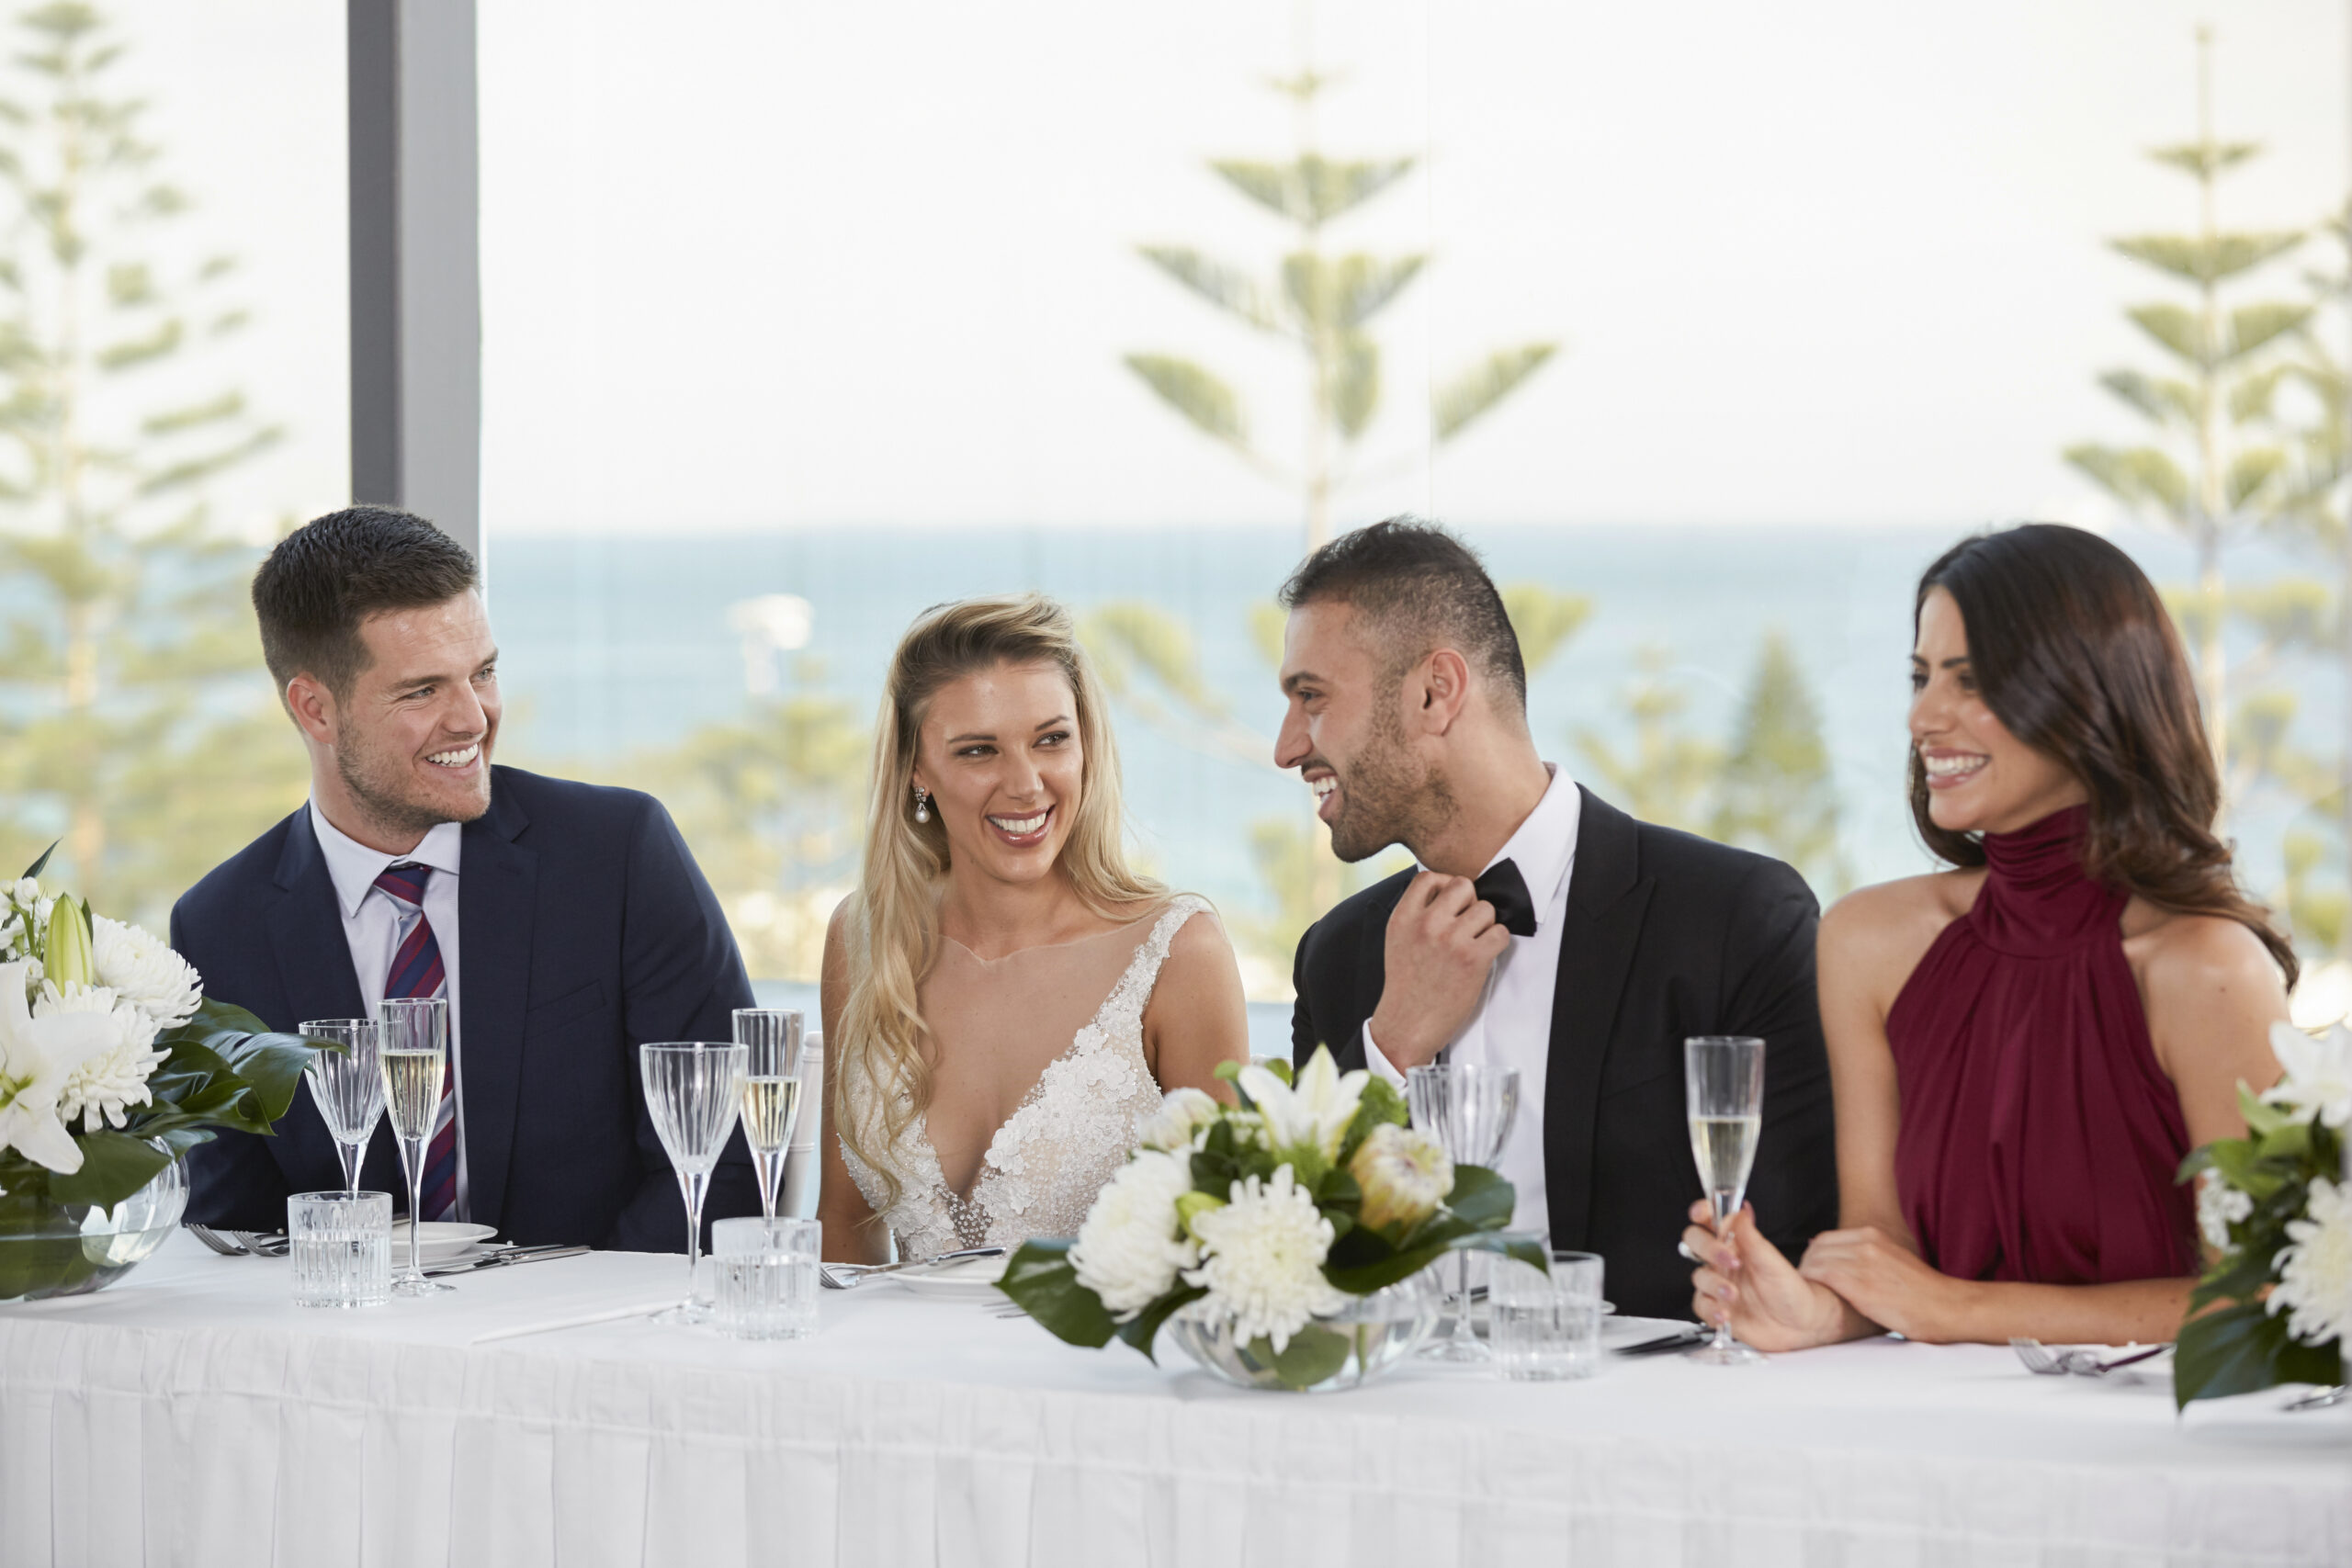 Rendezvous Hotel Perth Scarborough’s Wedding Showcase